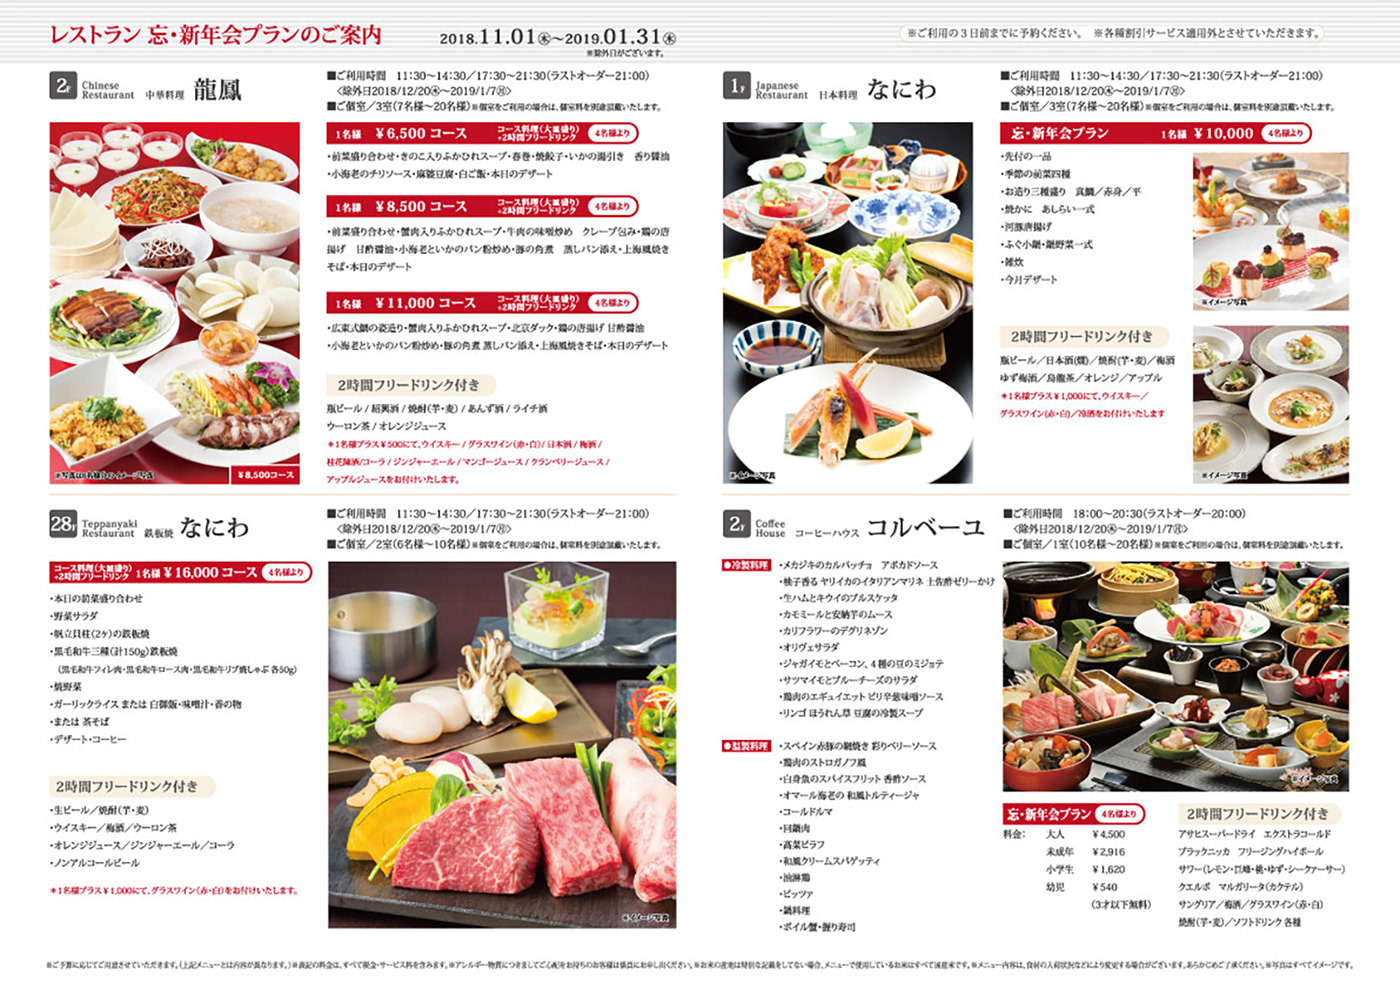 graohic design print brochure pamphlet branding  kokura rihga royal hotel anniversary